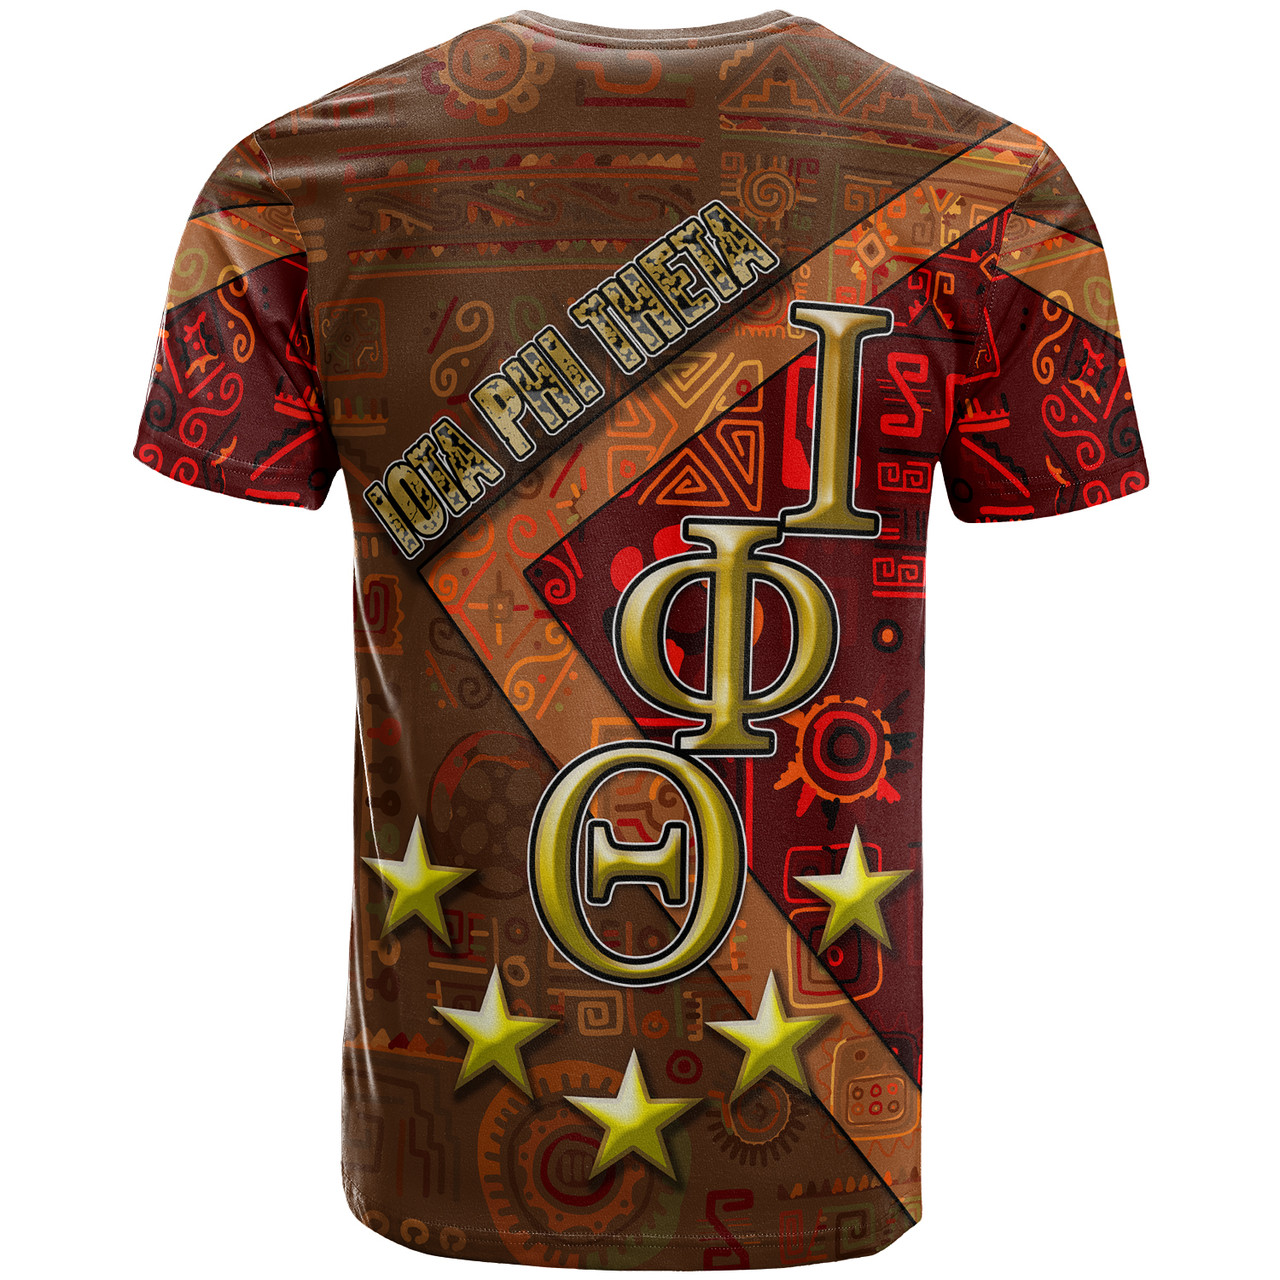 Iota Phi Theta T- Shirt - Iota Phi Theta Fraternity With Stars T- Shirt